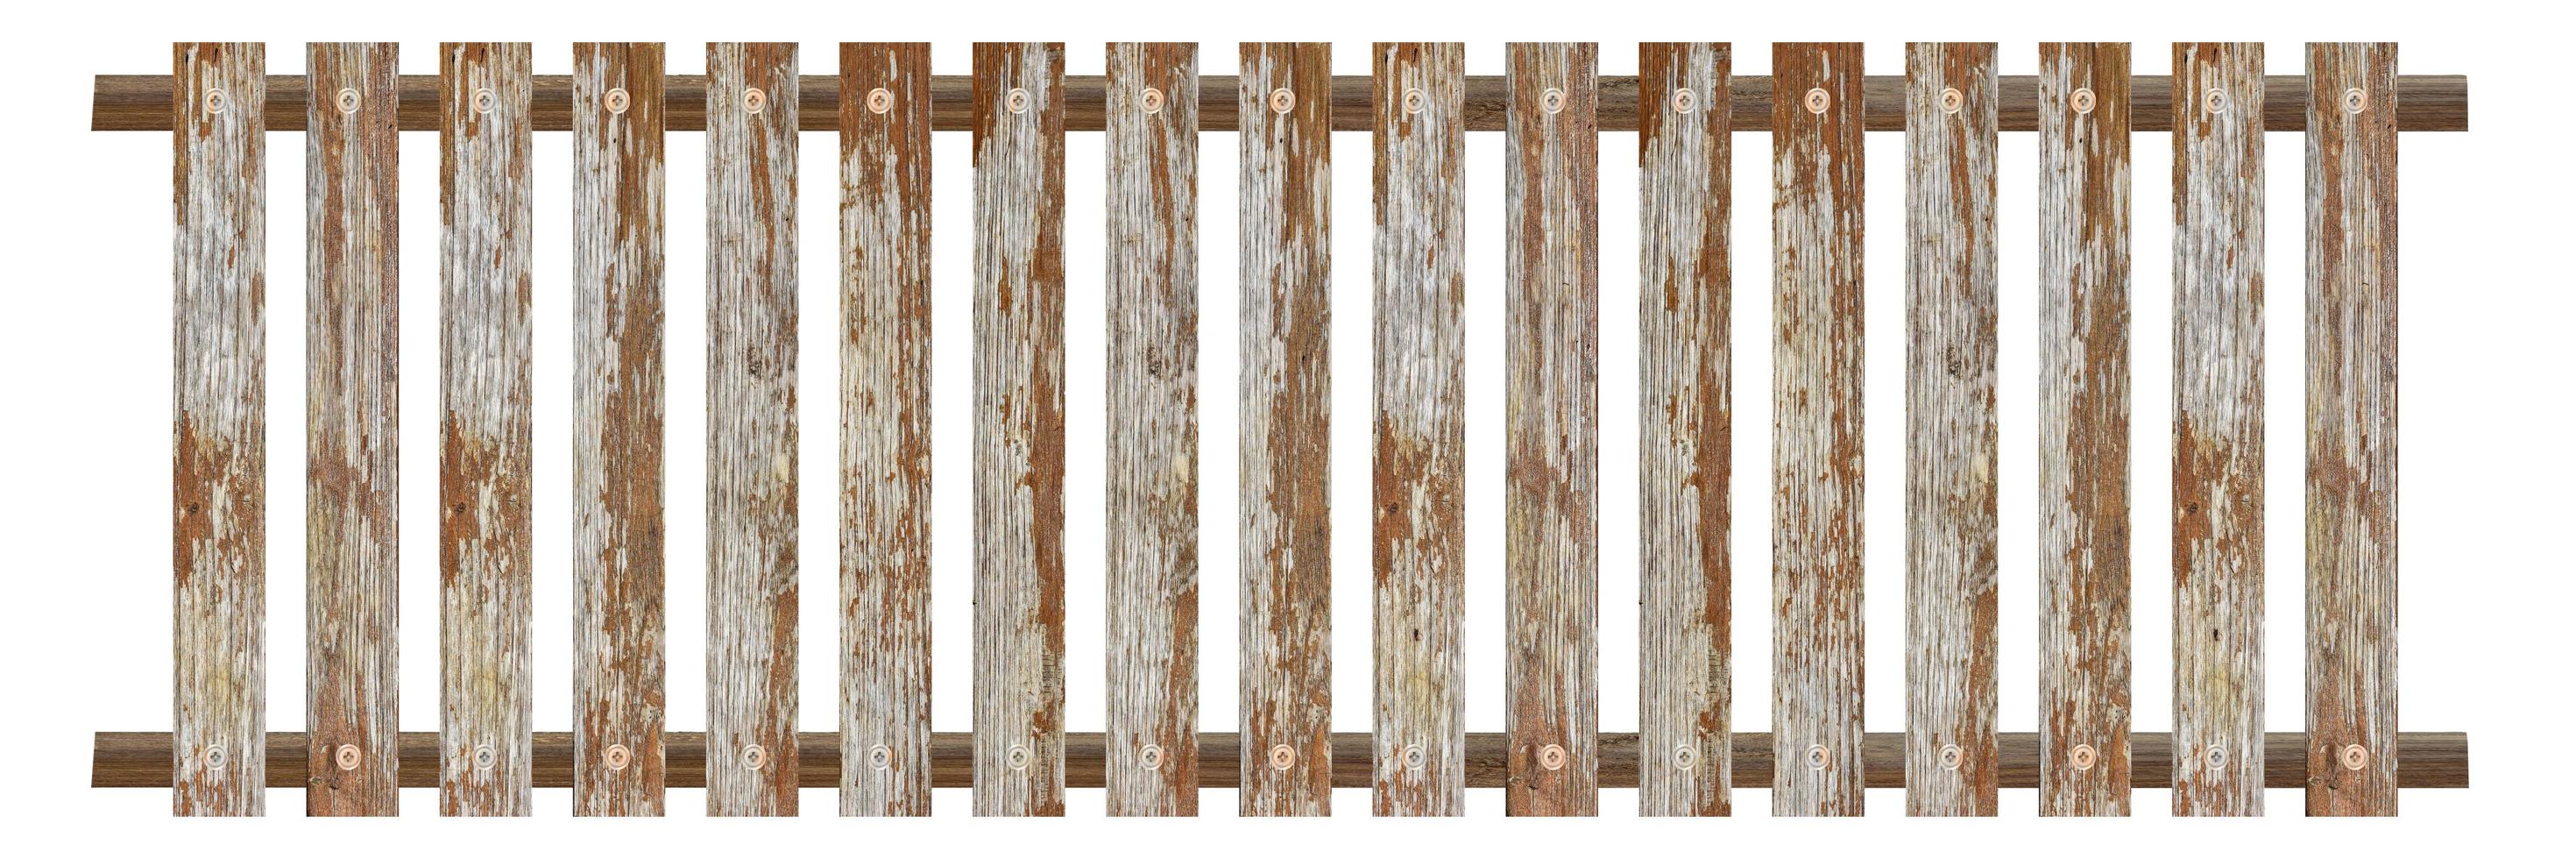 valla de madera aislada sobre fondo blanco. objeto con trazado de recorte. foto